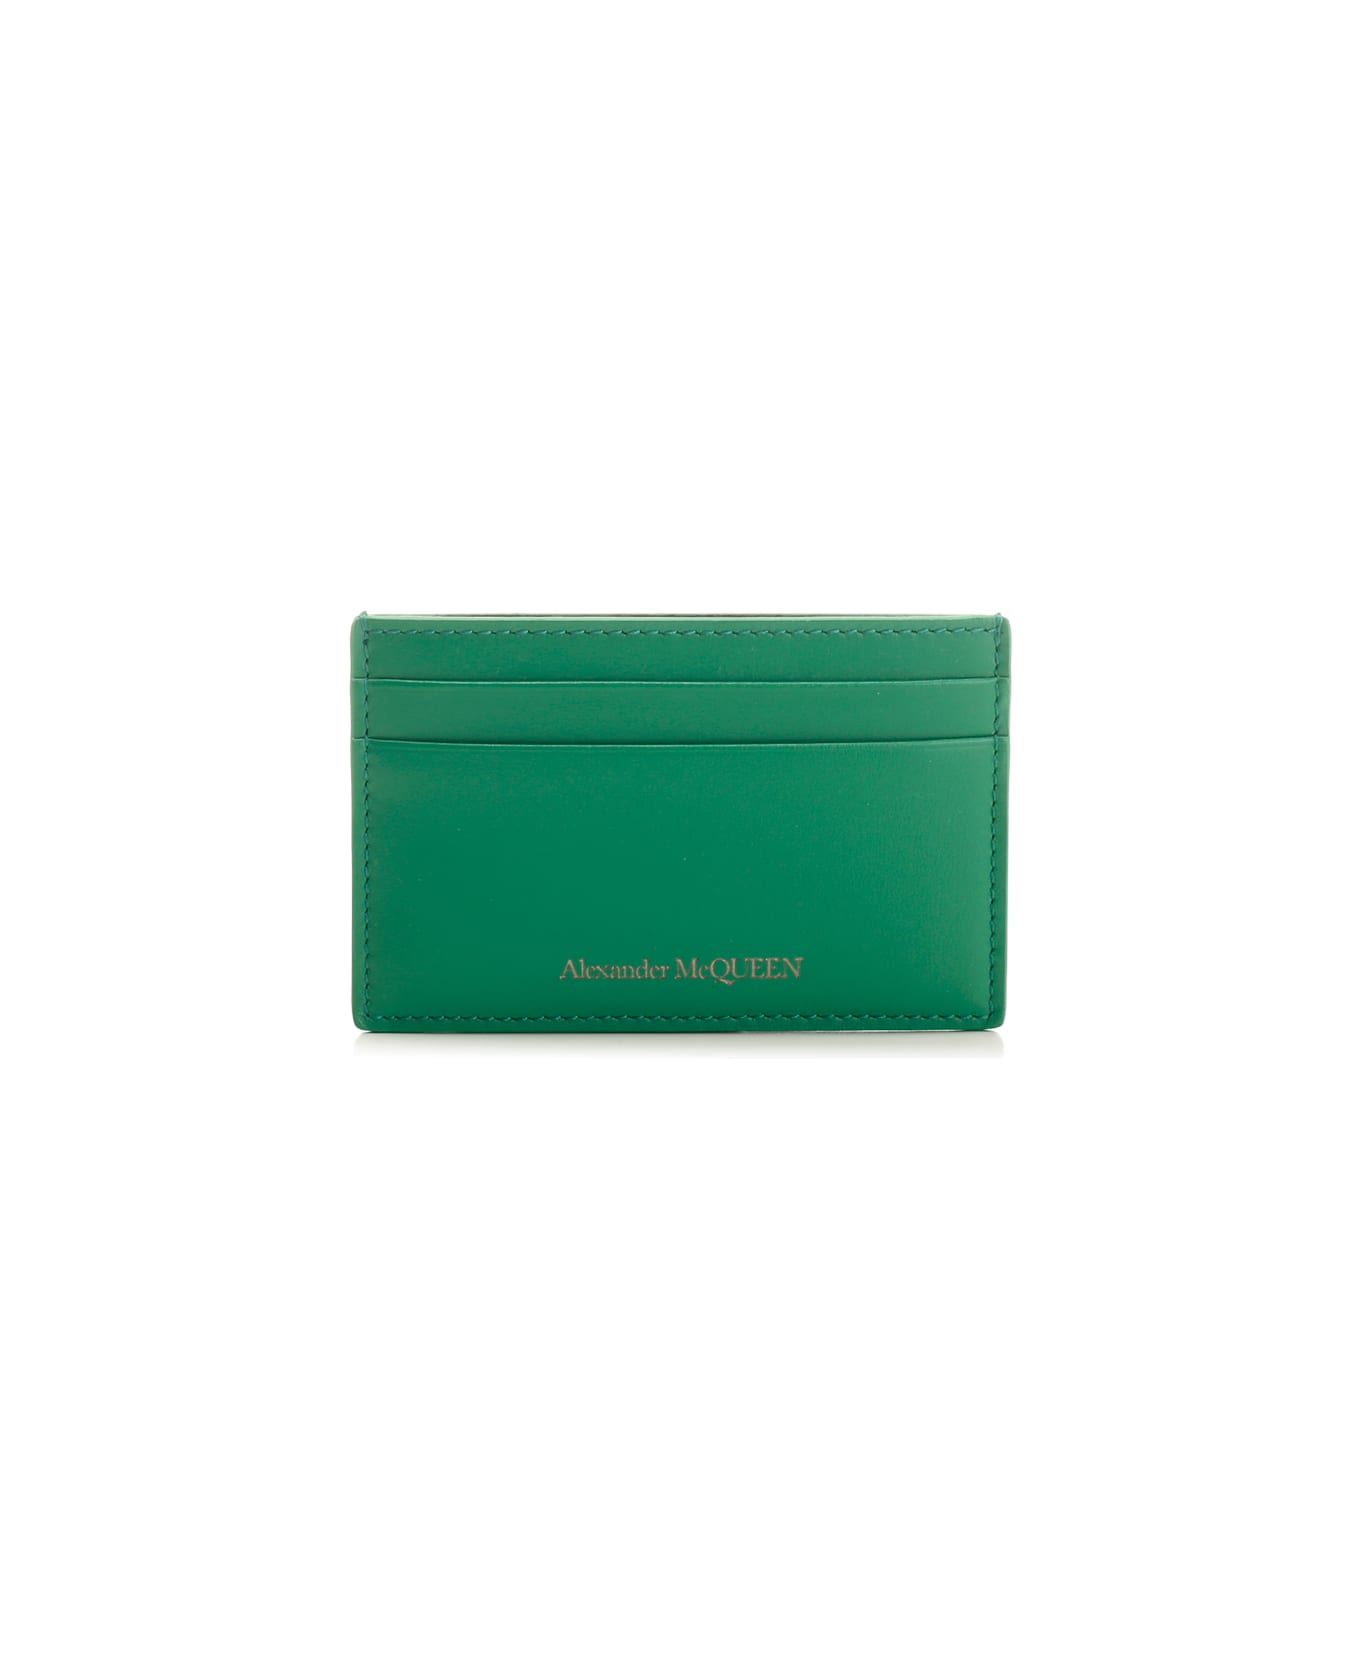 Alexander McQueen Leather Card Holder - VERDE 財布